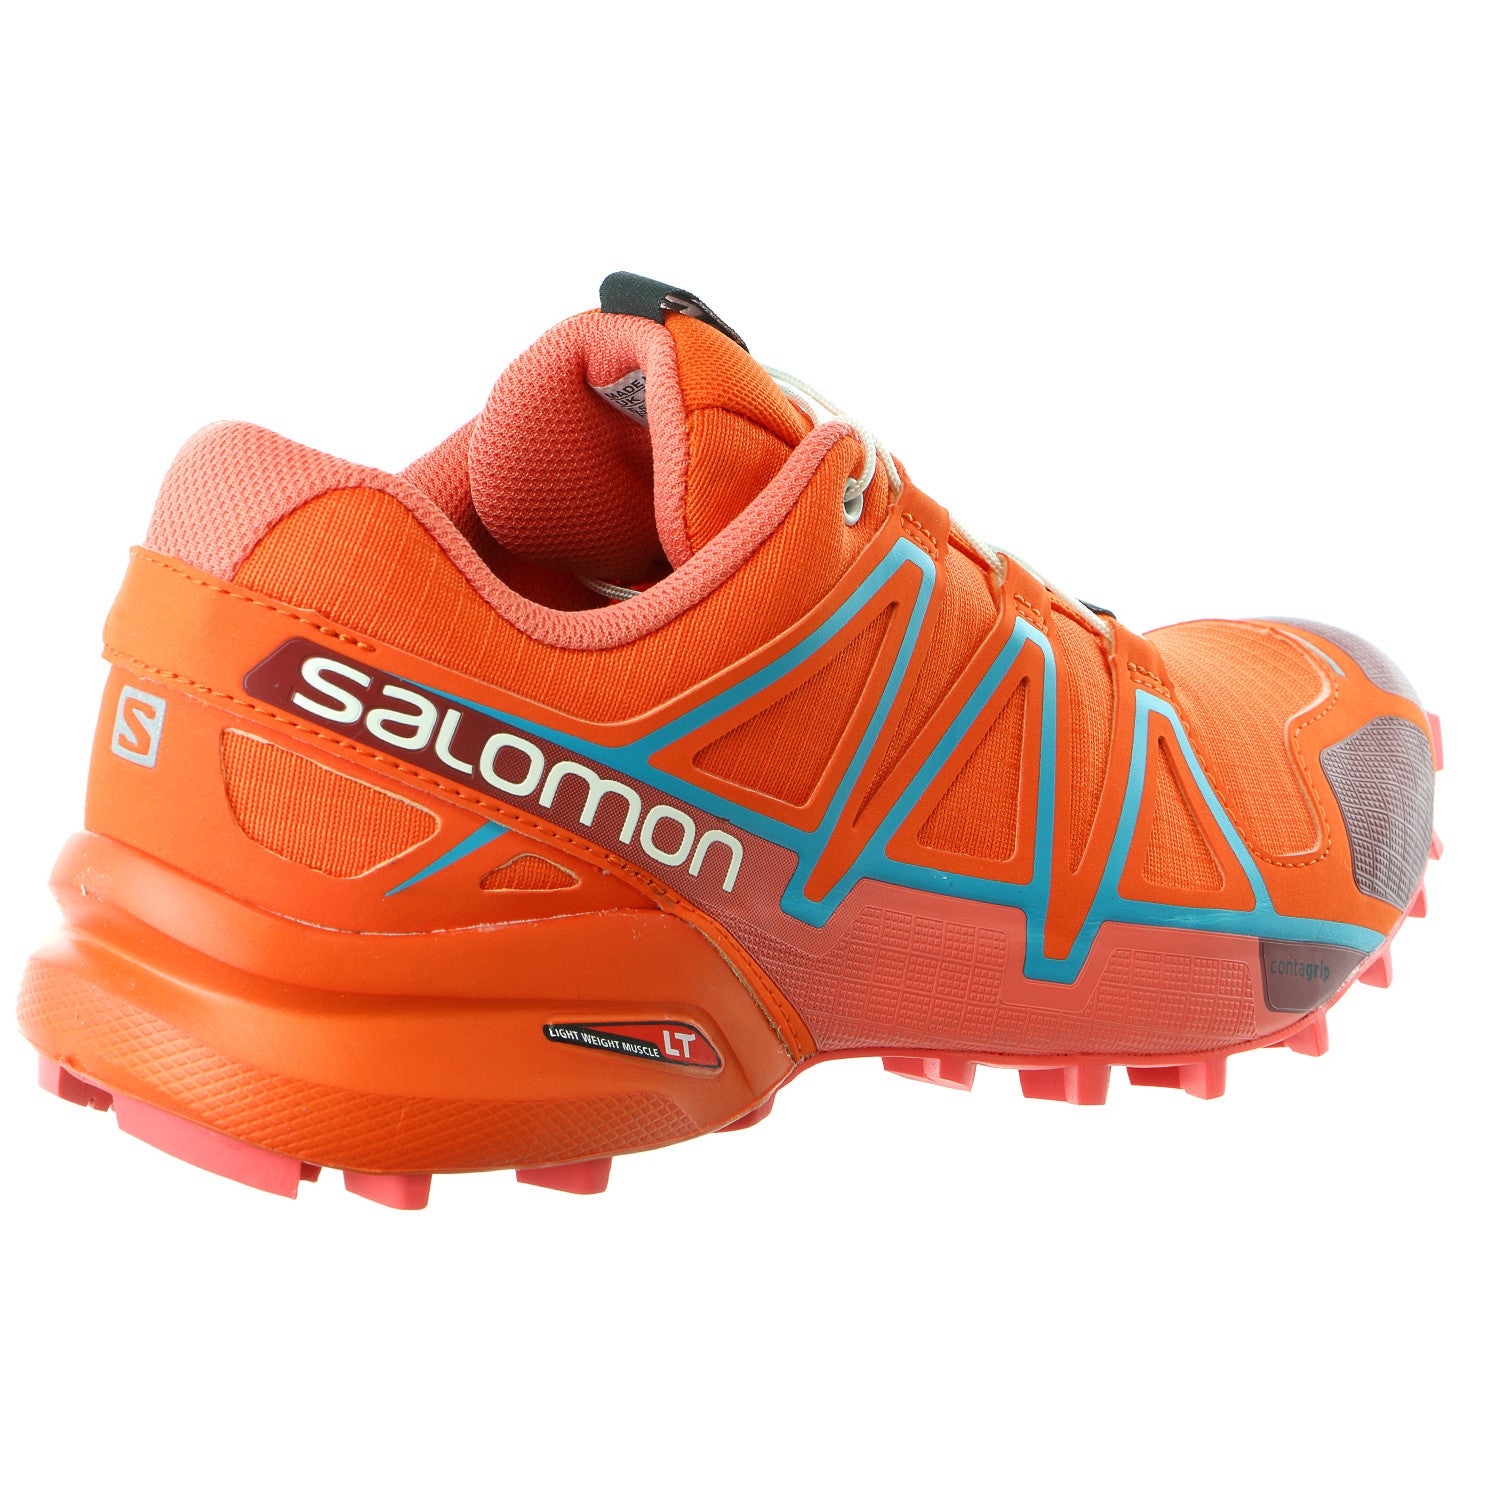 Salomon Speedcross 4 Trail Runners - Women's - Shoplifestyle